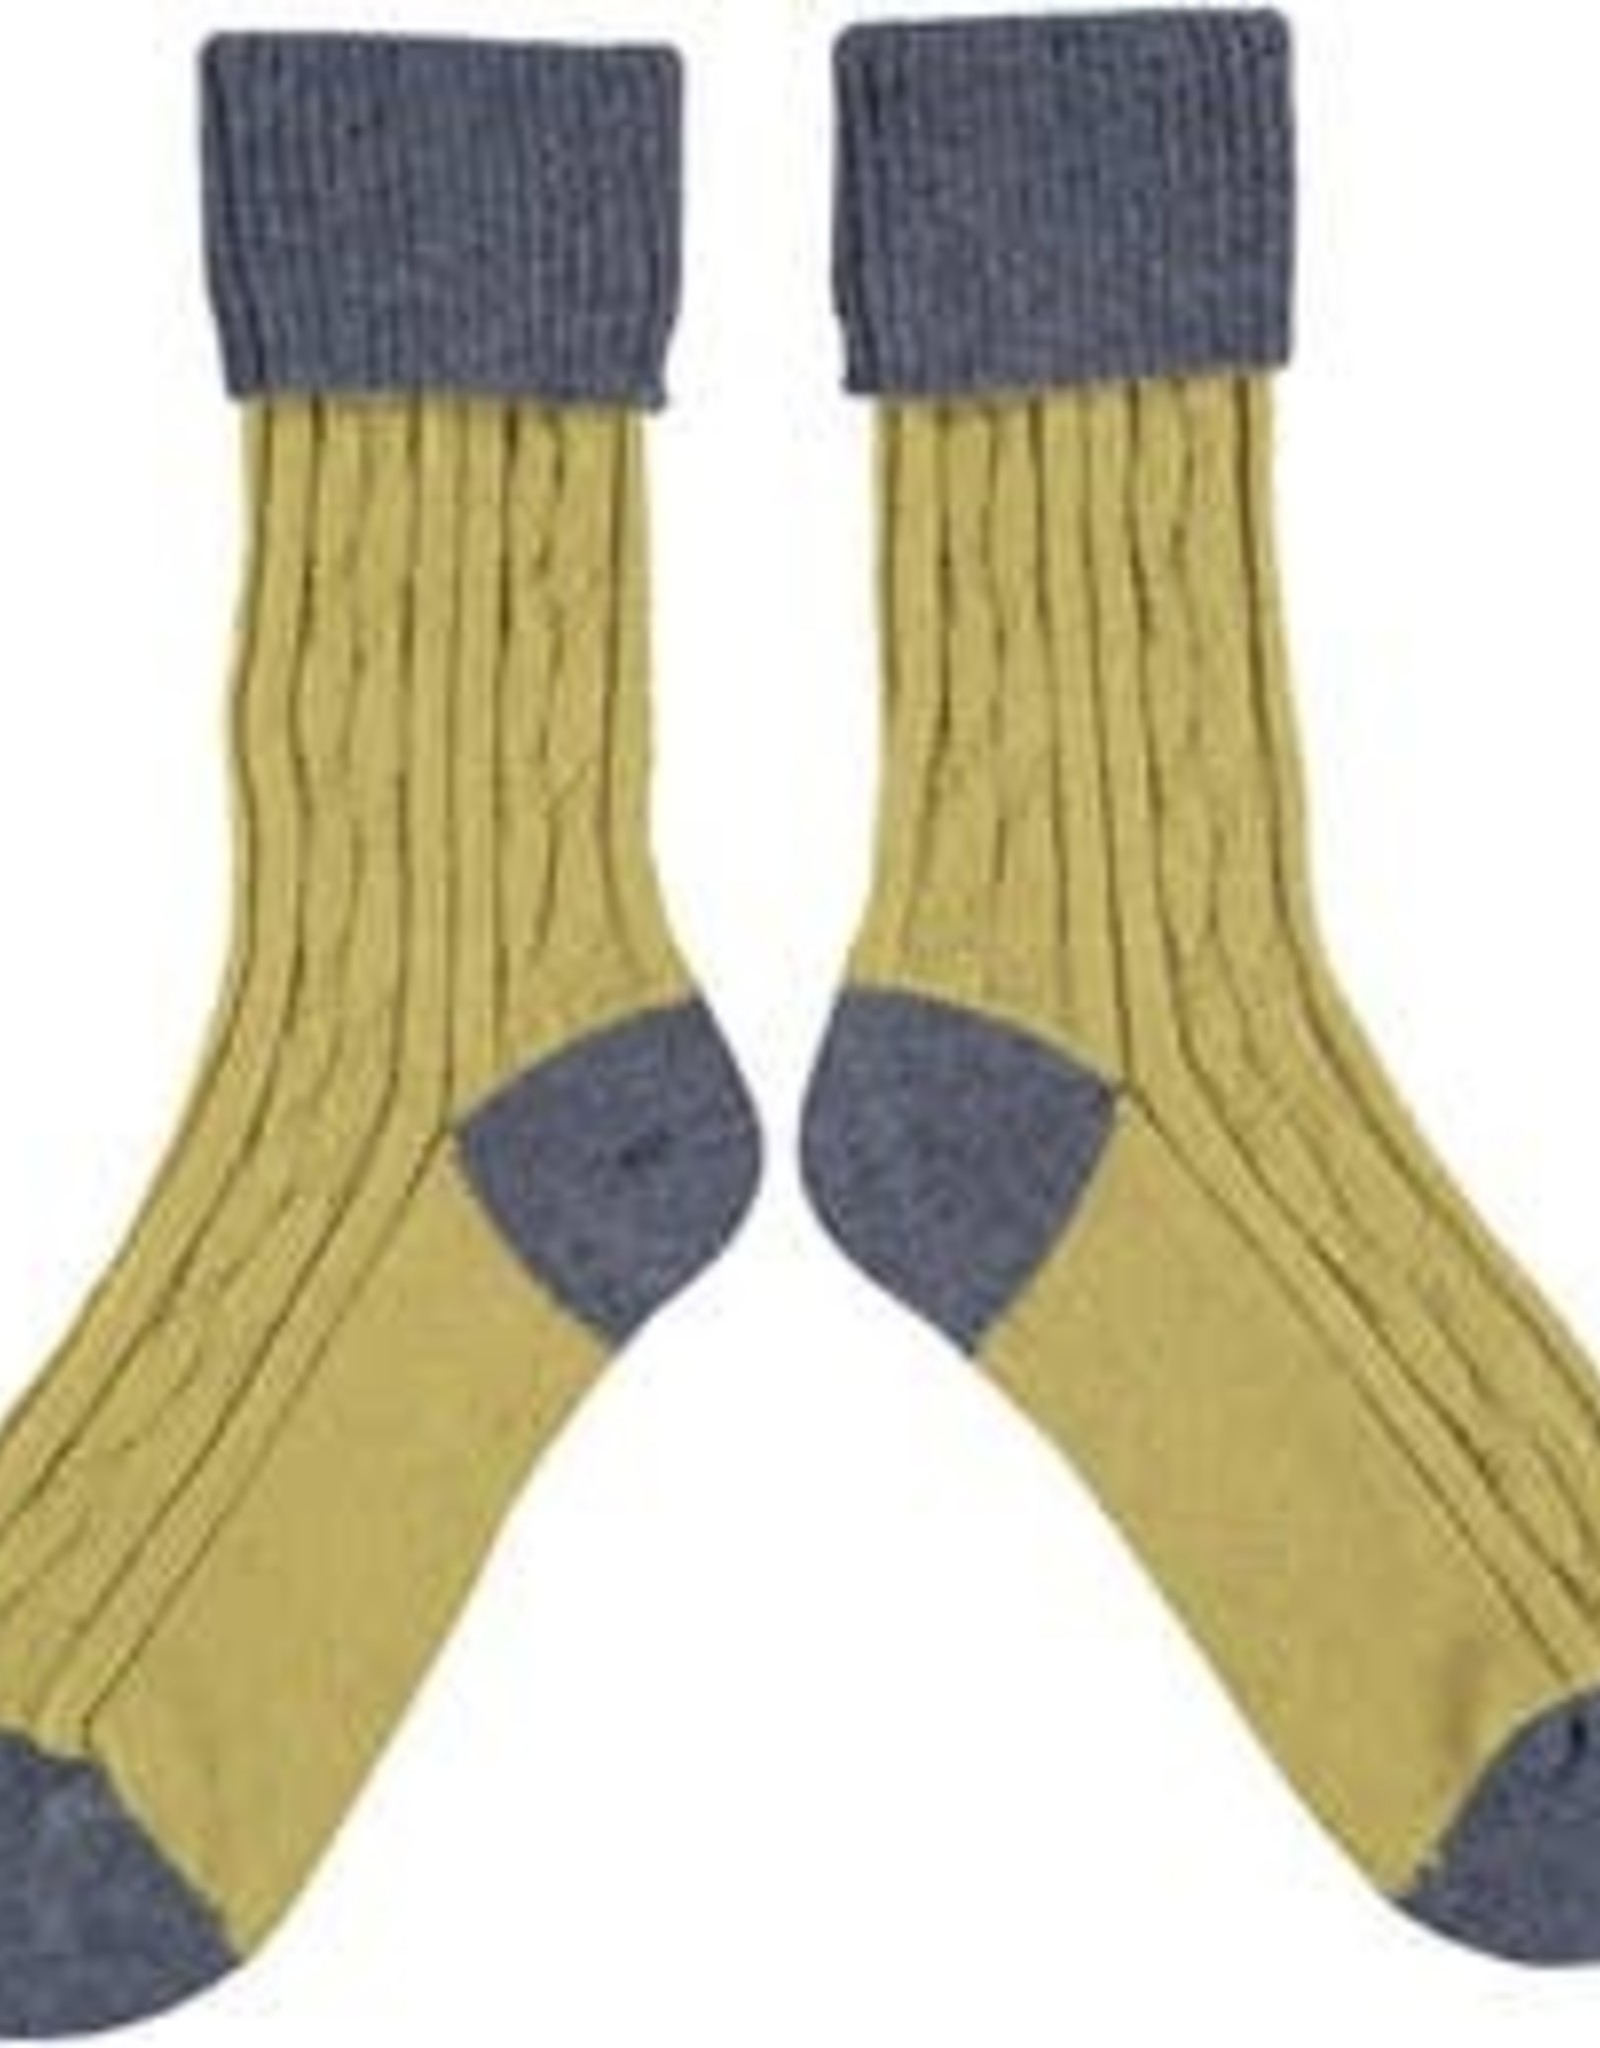 Catherine Tough - Cashmere /Wool Blend Slouch Socks - Lime & Slate (LG)